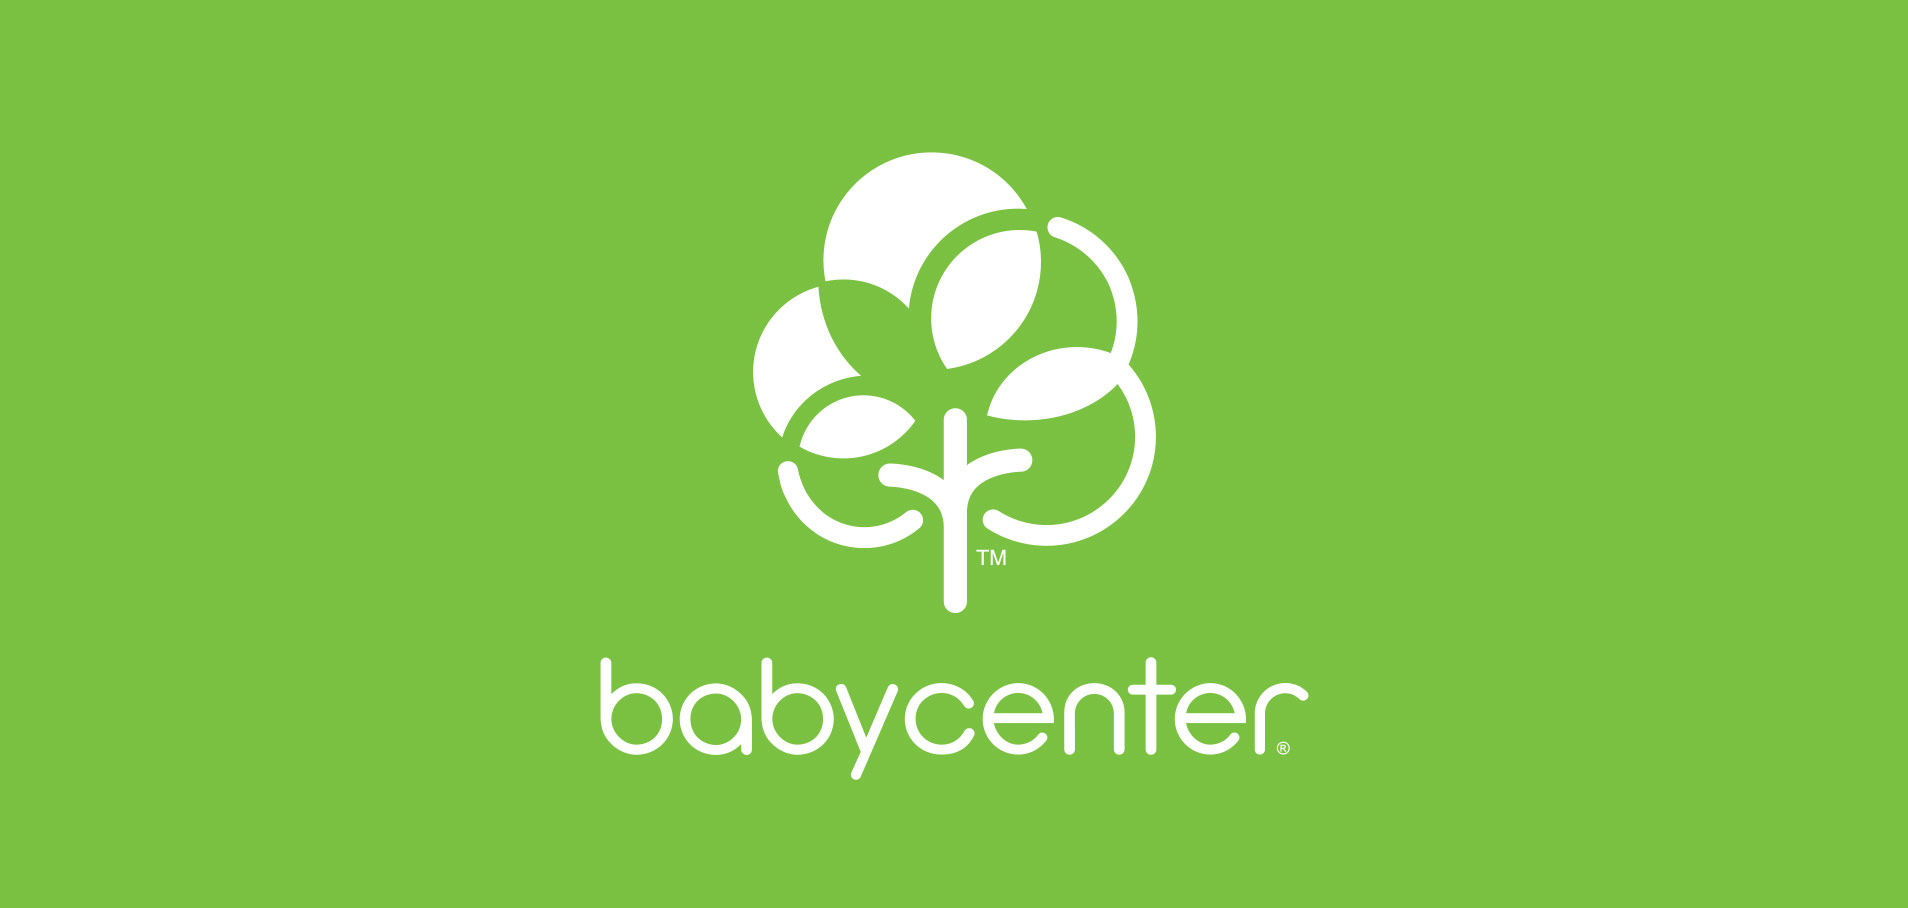 Baby center logo green image